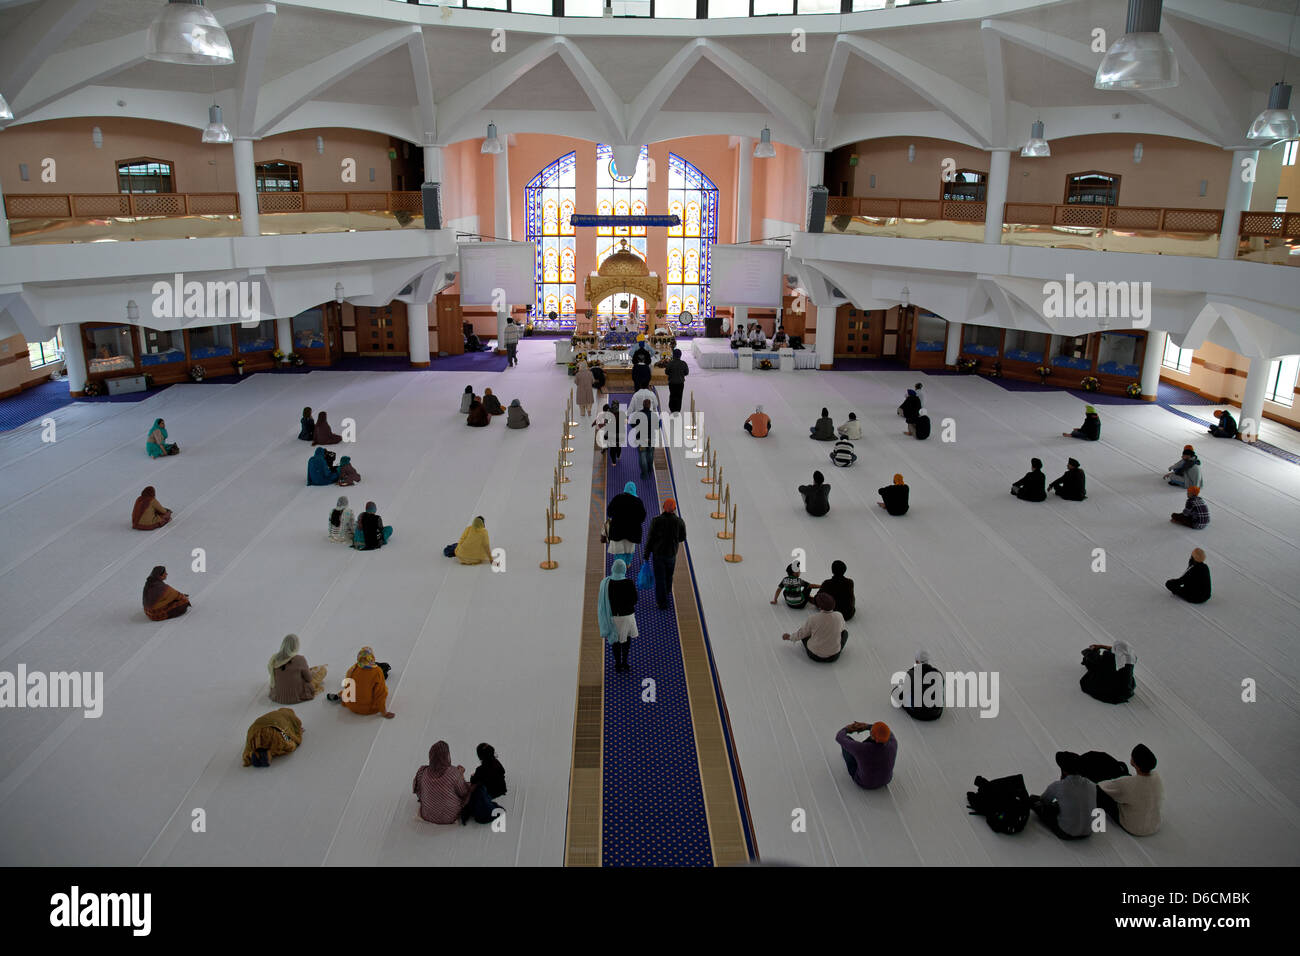 Pray hall Interior  of The Gurdwara Sri Guru Singh Sabha Southall Stock Photo